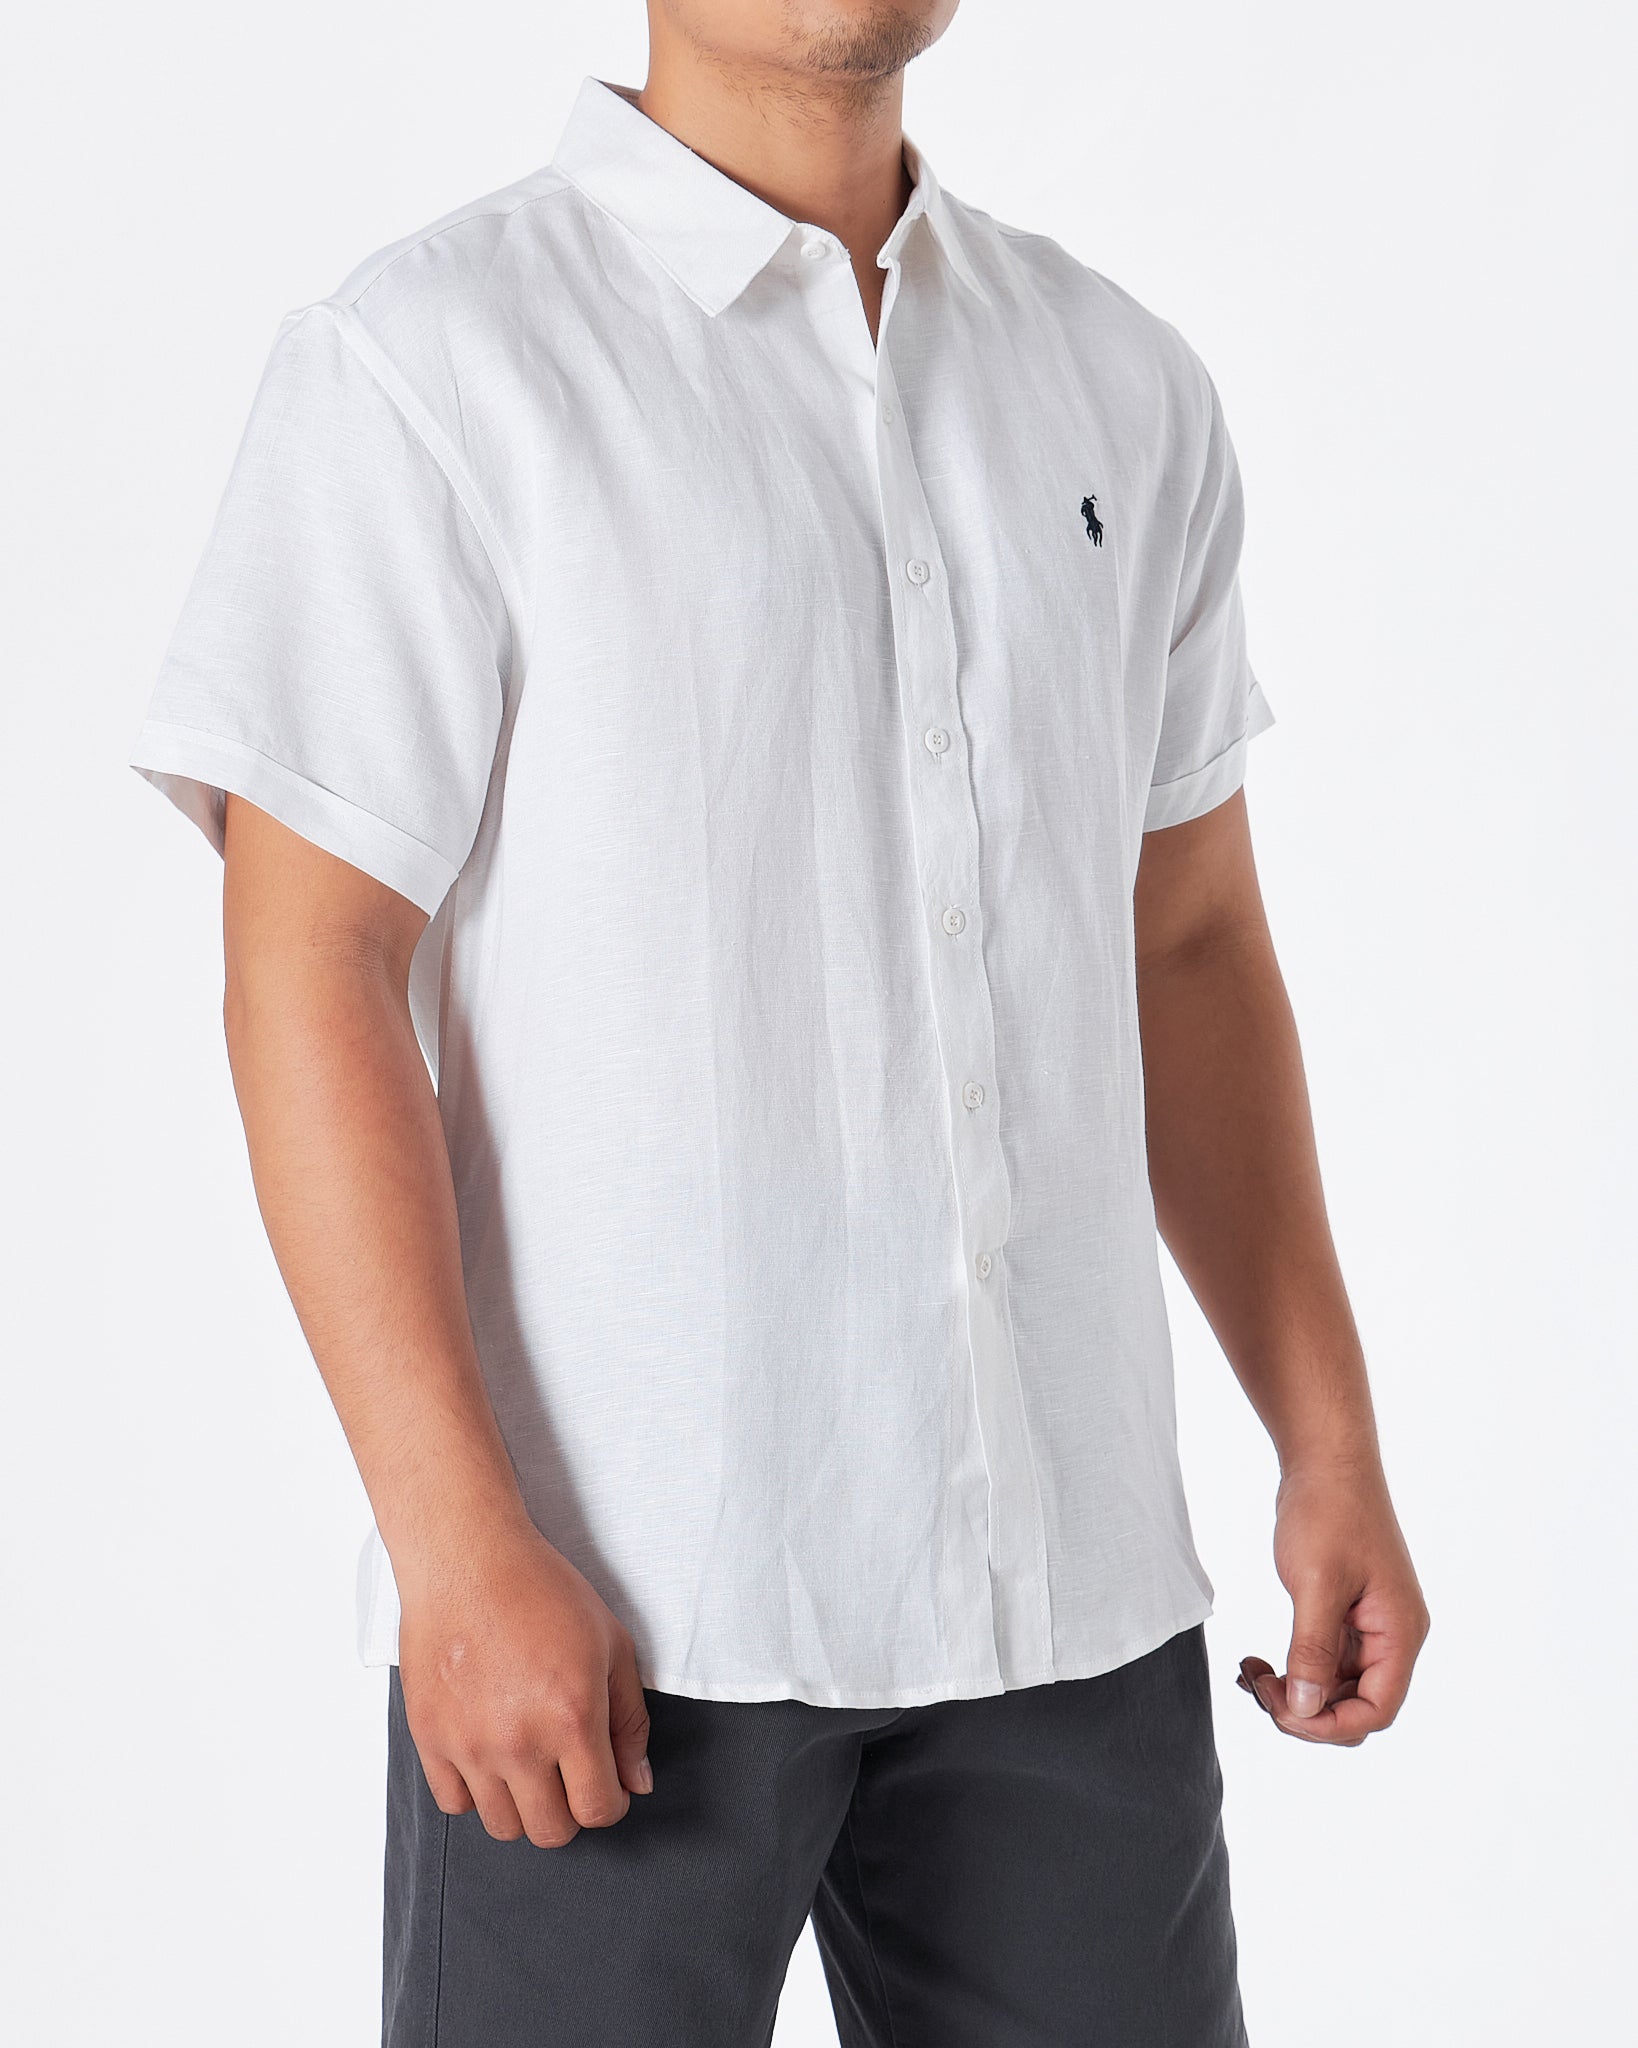 RL Cotton Men White Shirts Short Sleeve 28.90